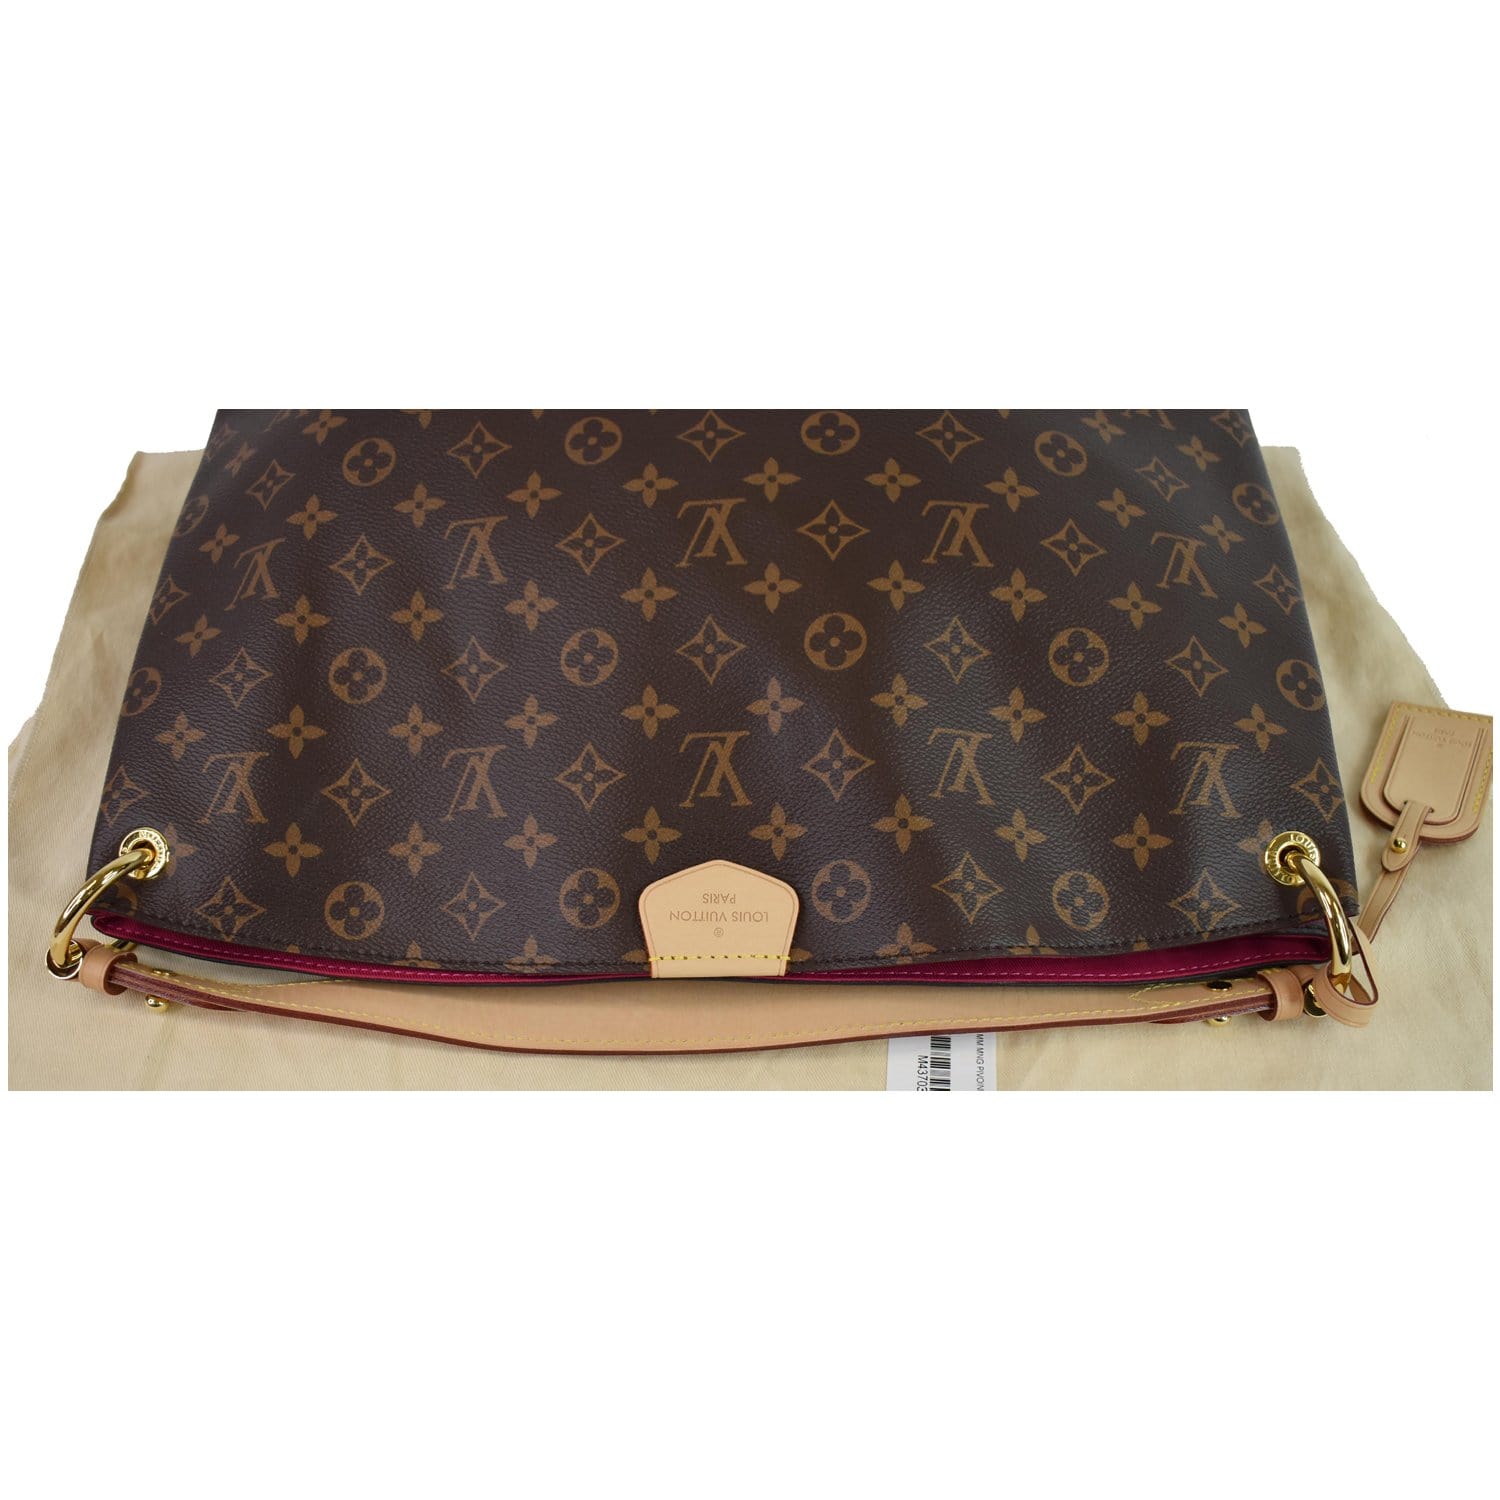 Louis Vuitton Graceful MM Shoulder Bag in Monogram Canvas M43704 Very Good